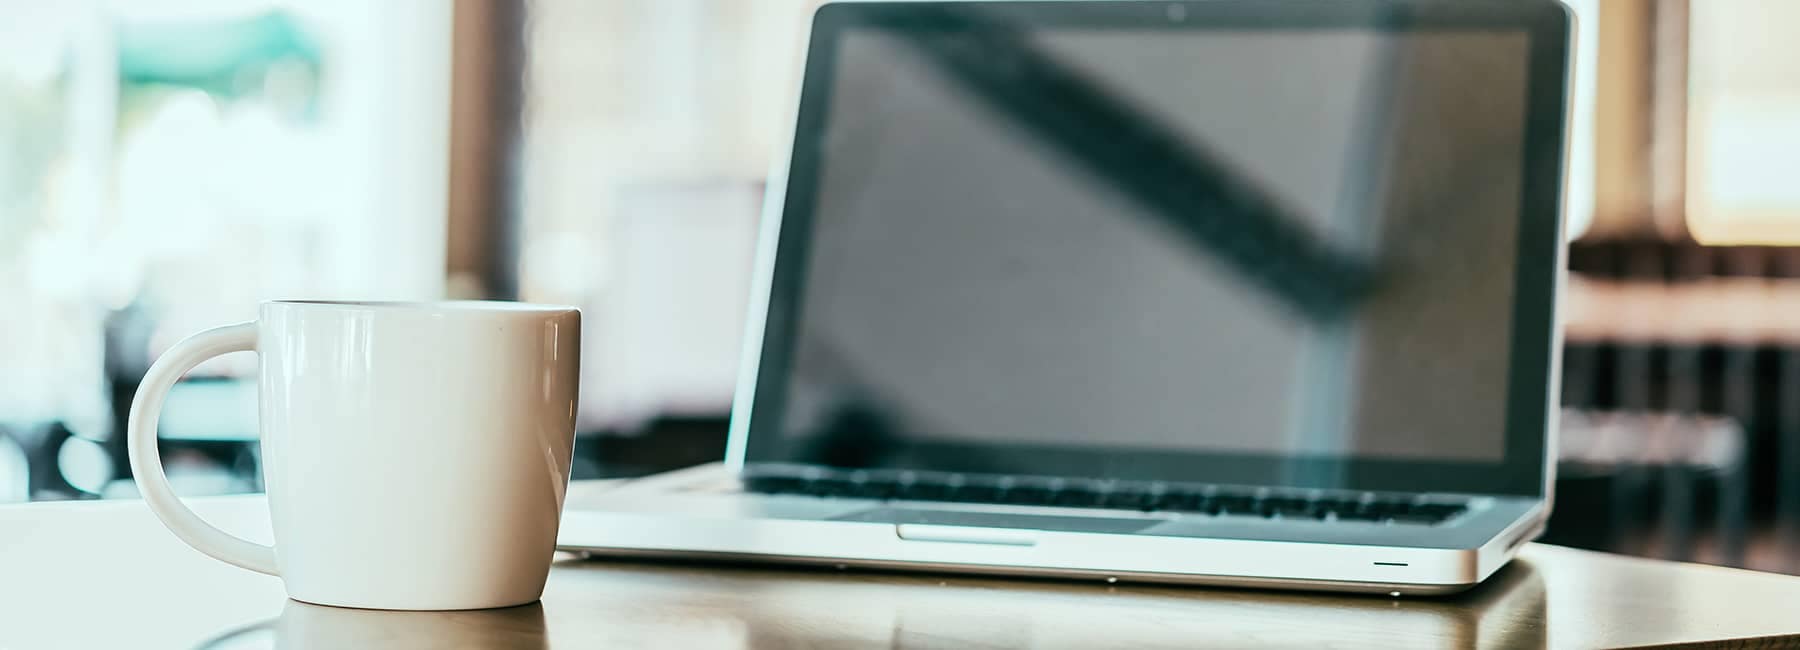 mug and laptop